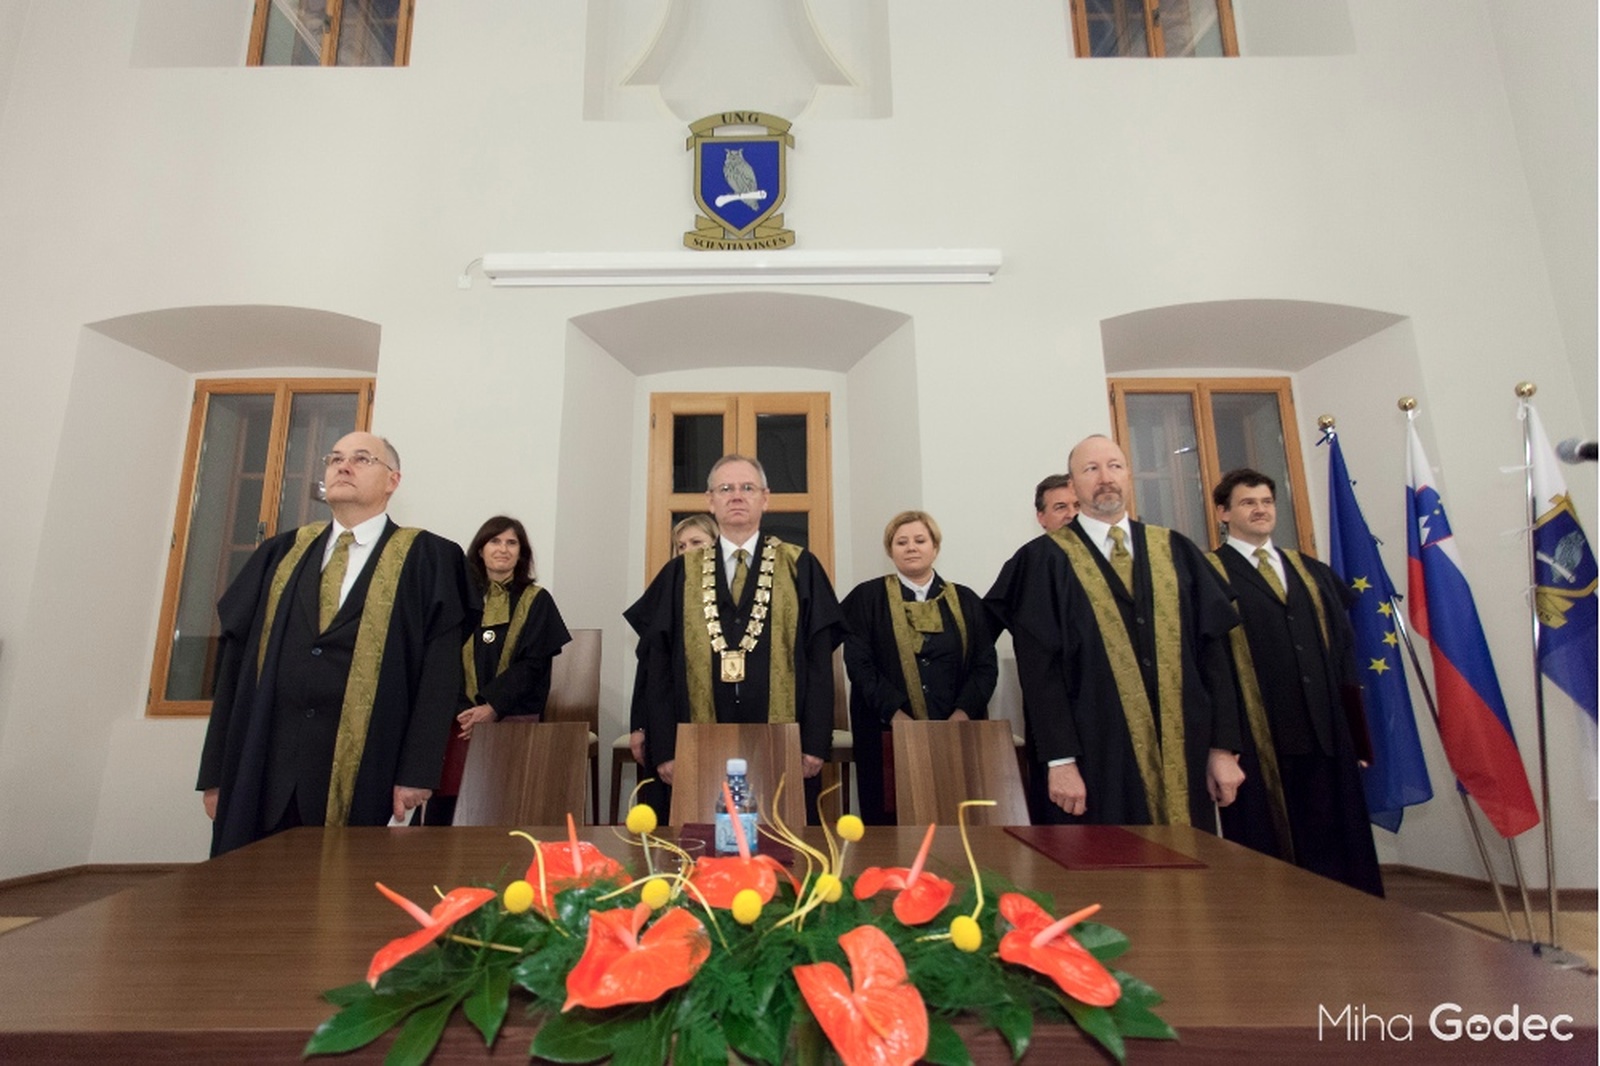 Rector, Vice-rectors and Deans of the University of Nova Gorica.